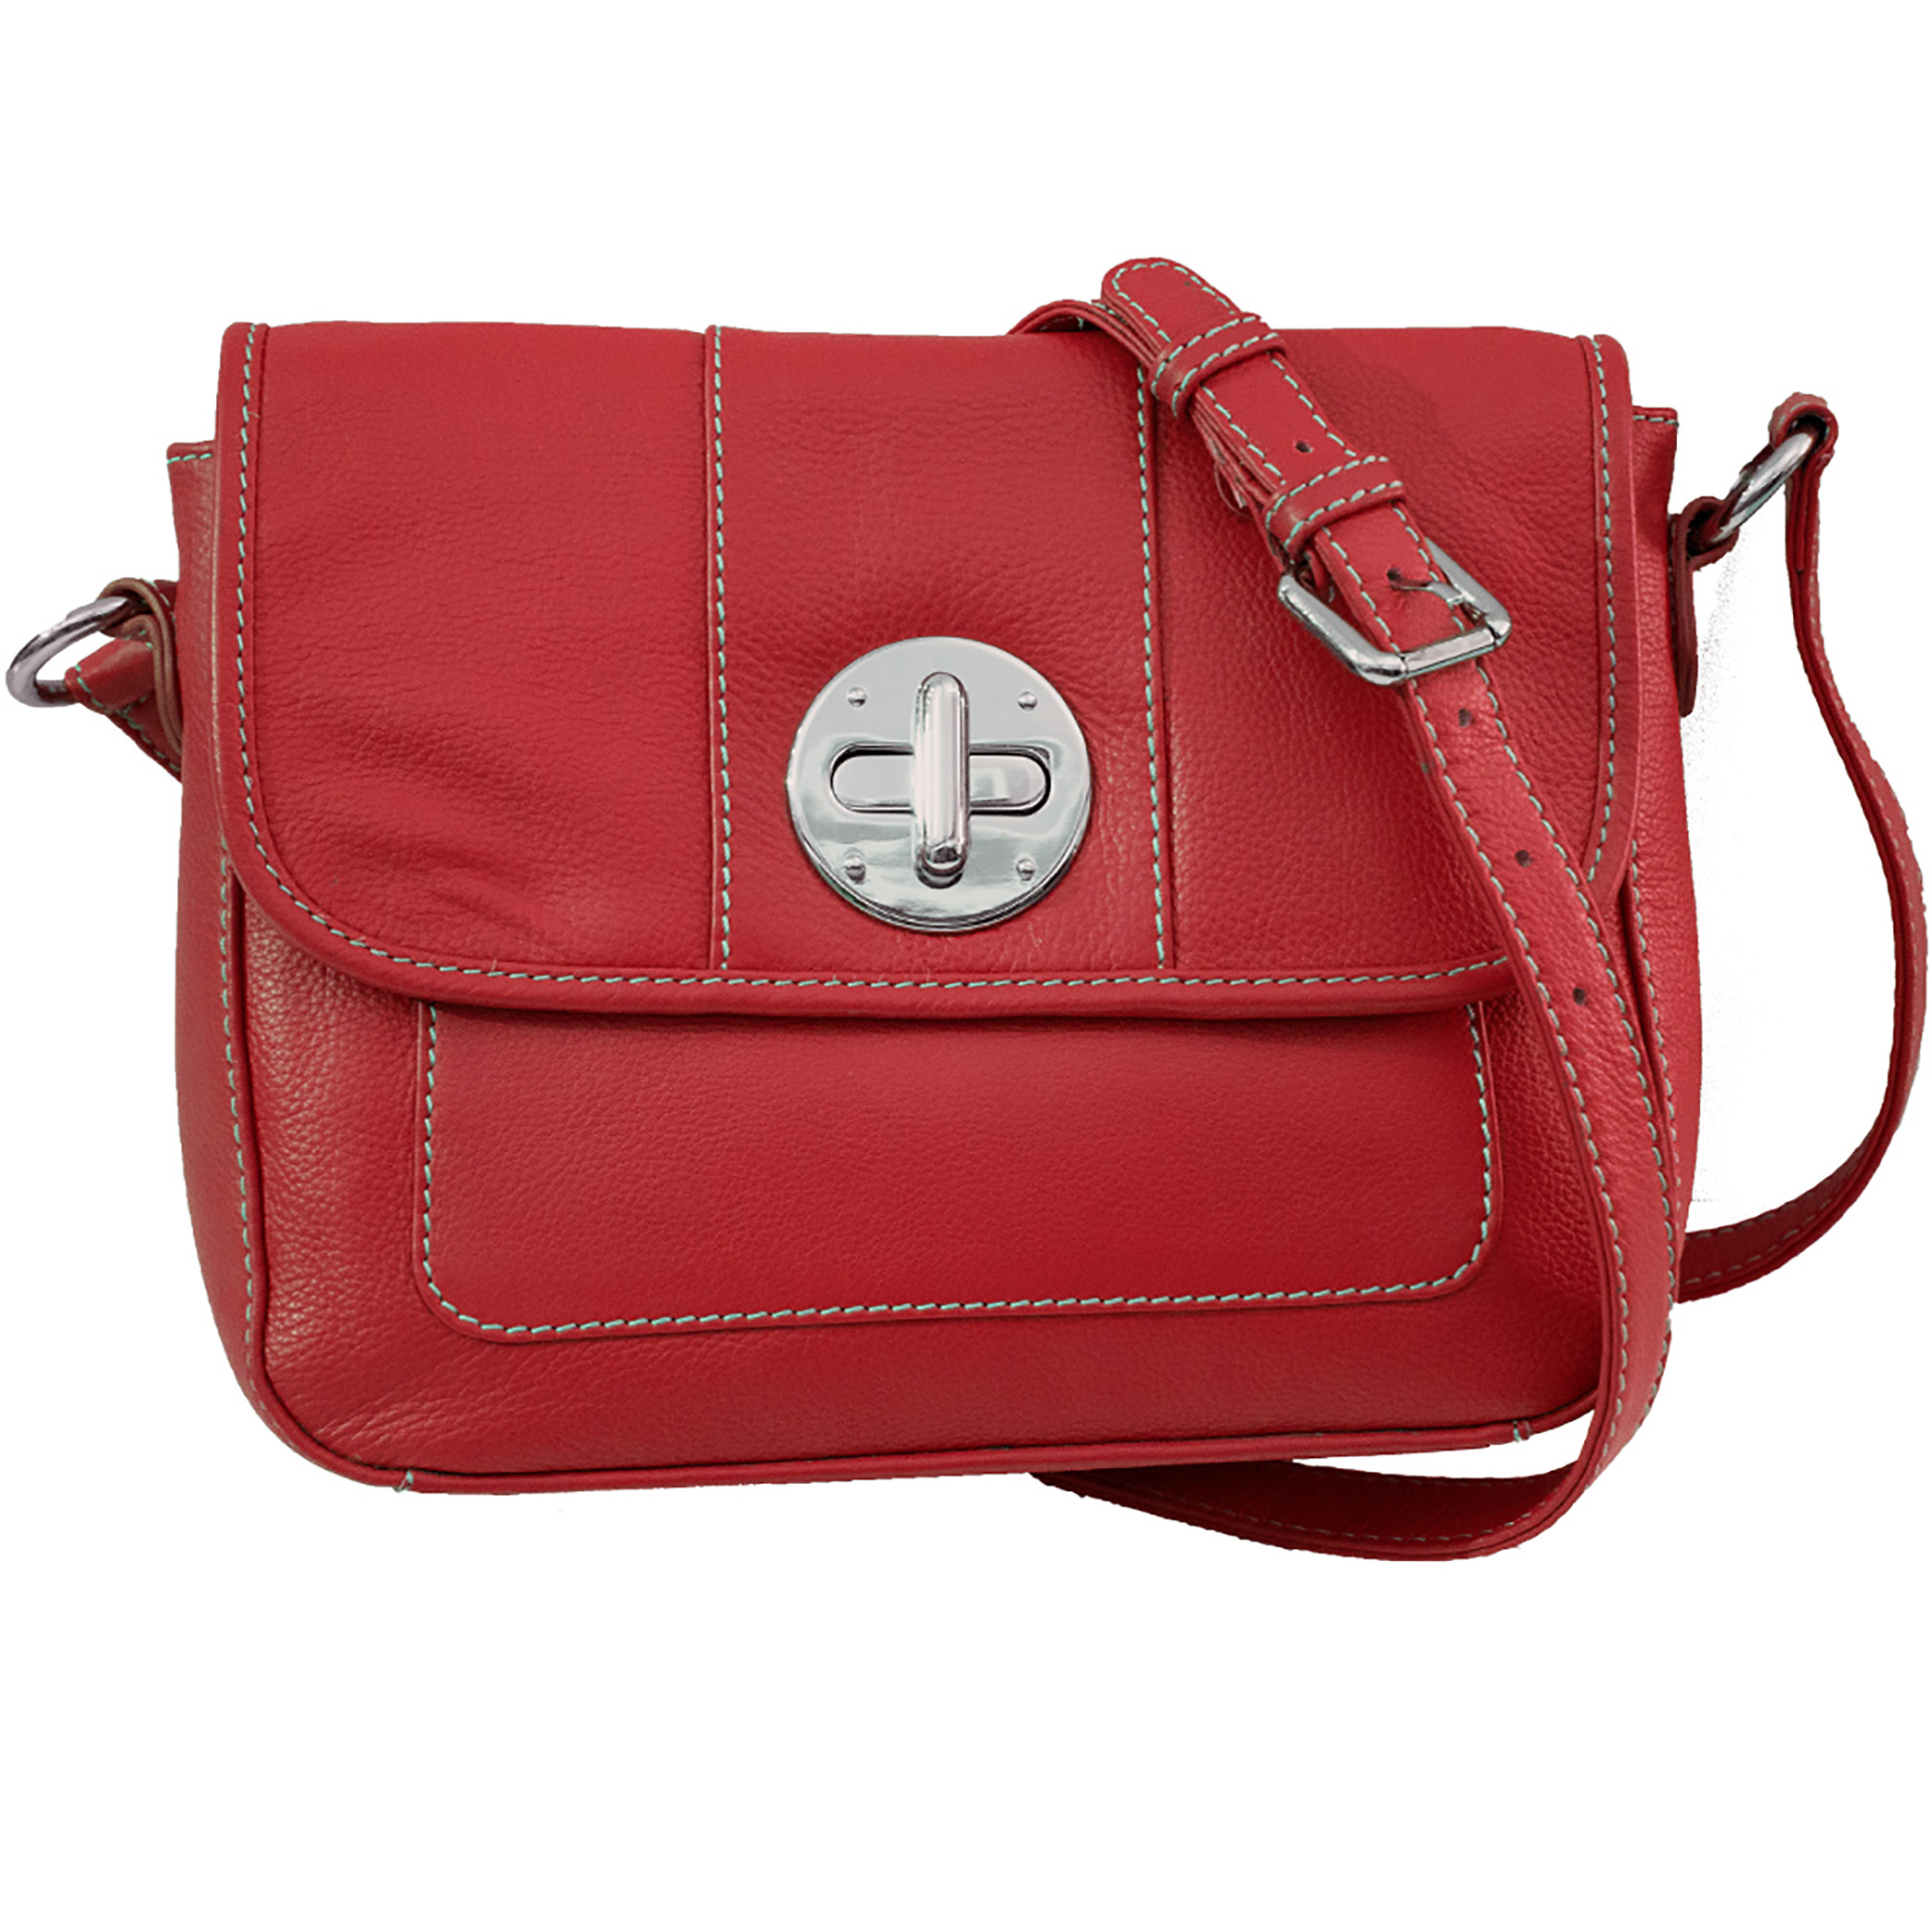 ILI 6984 Leather Crossbody Handbag